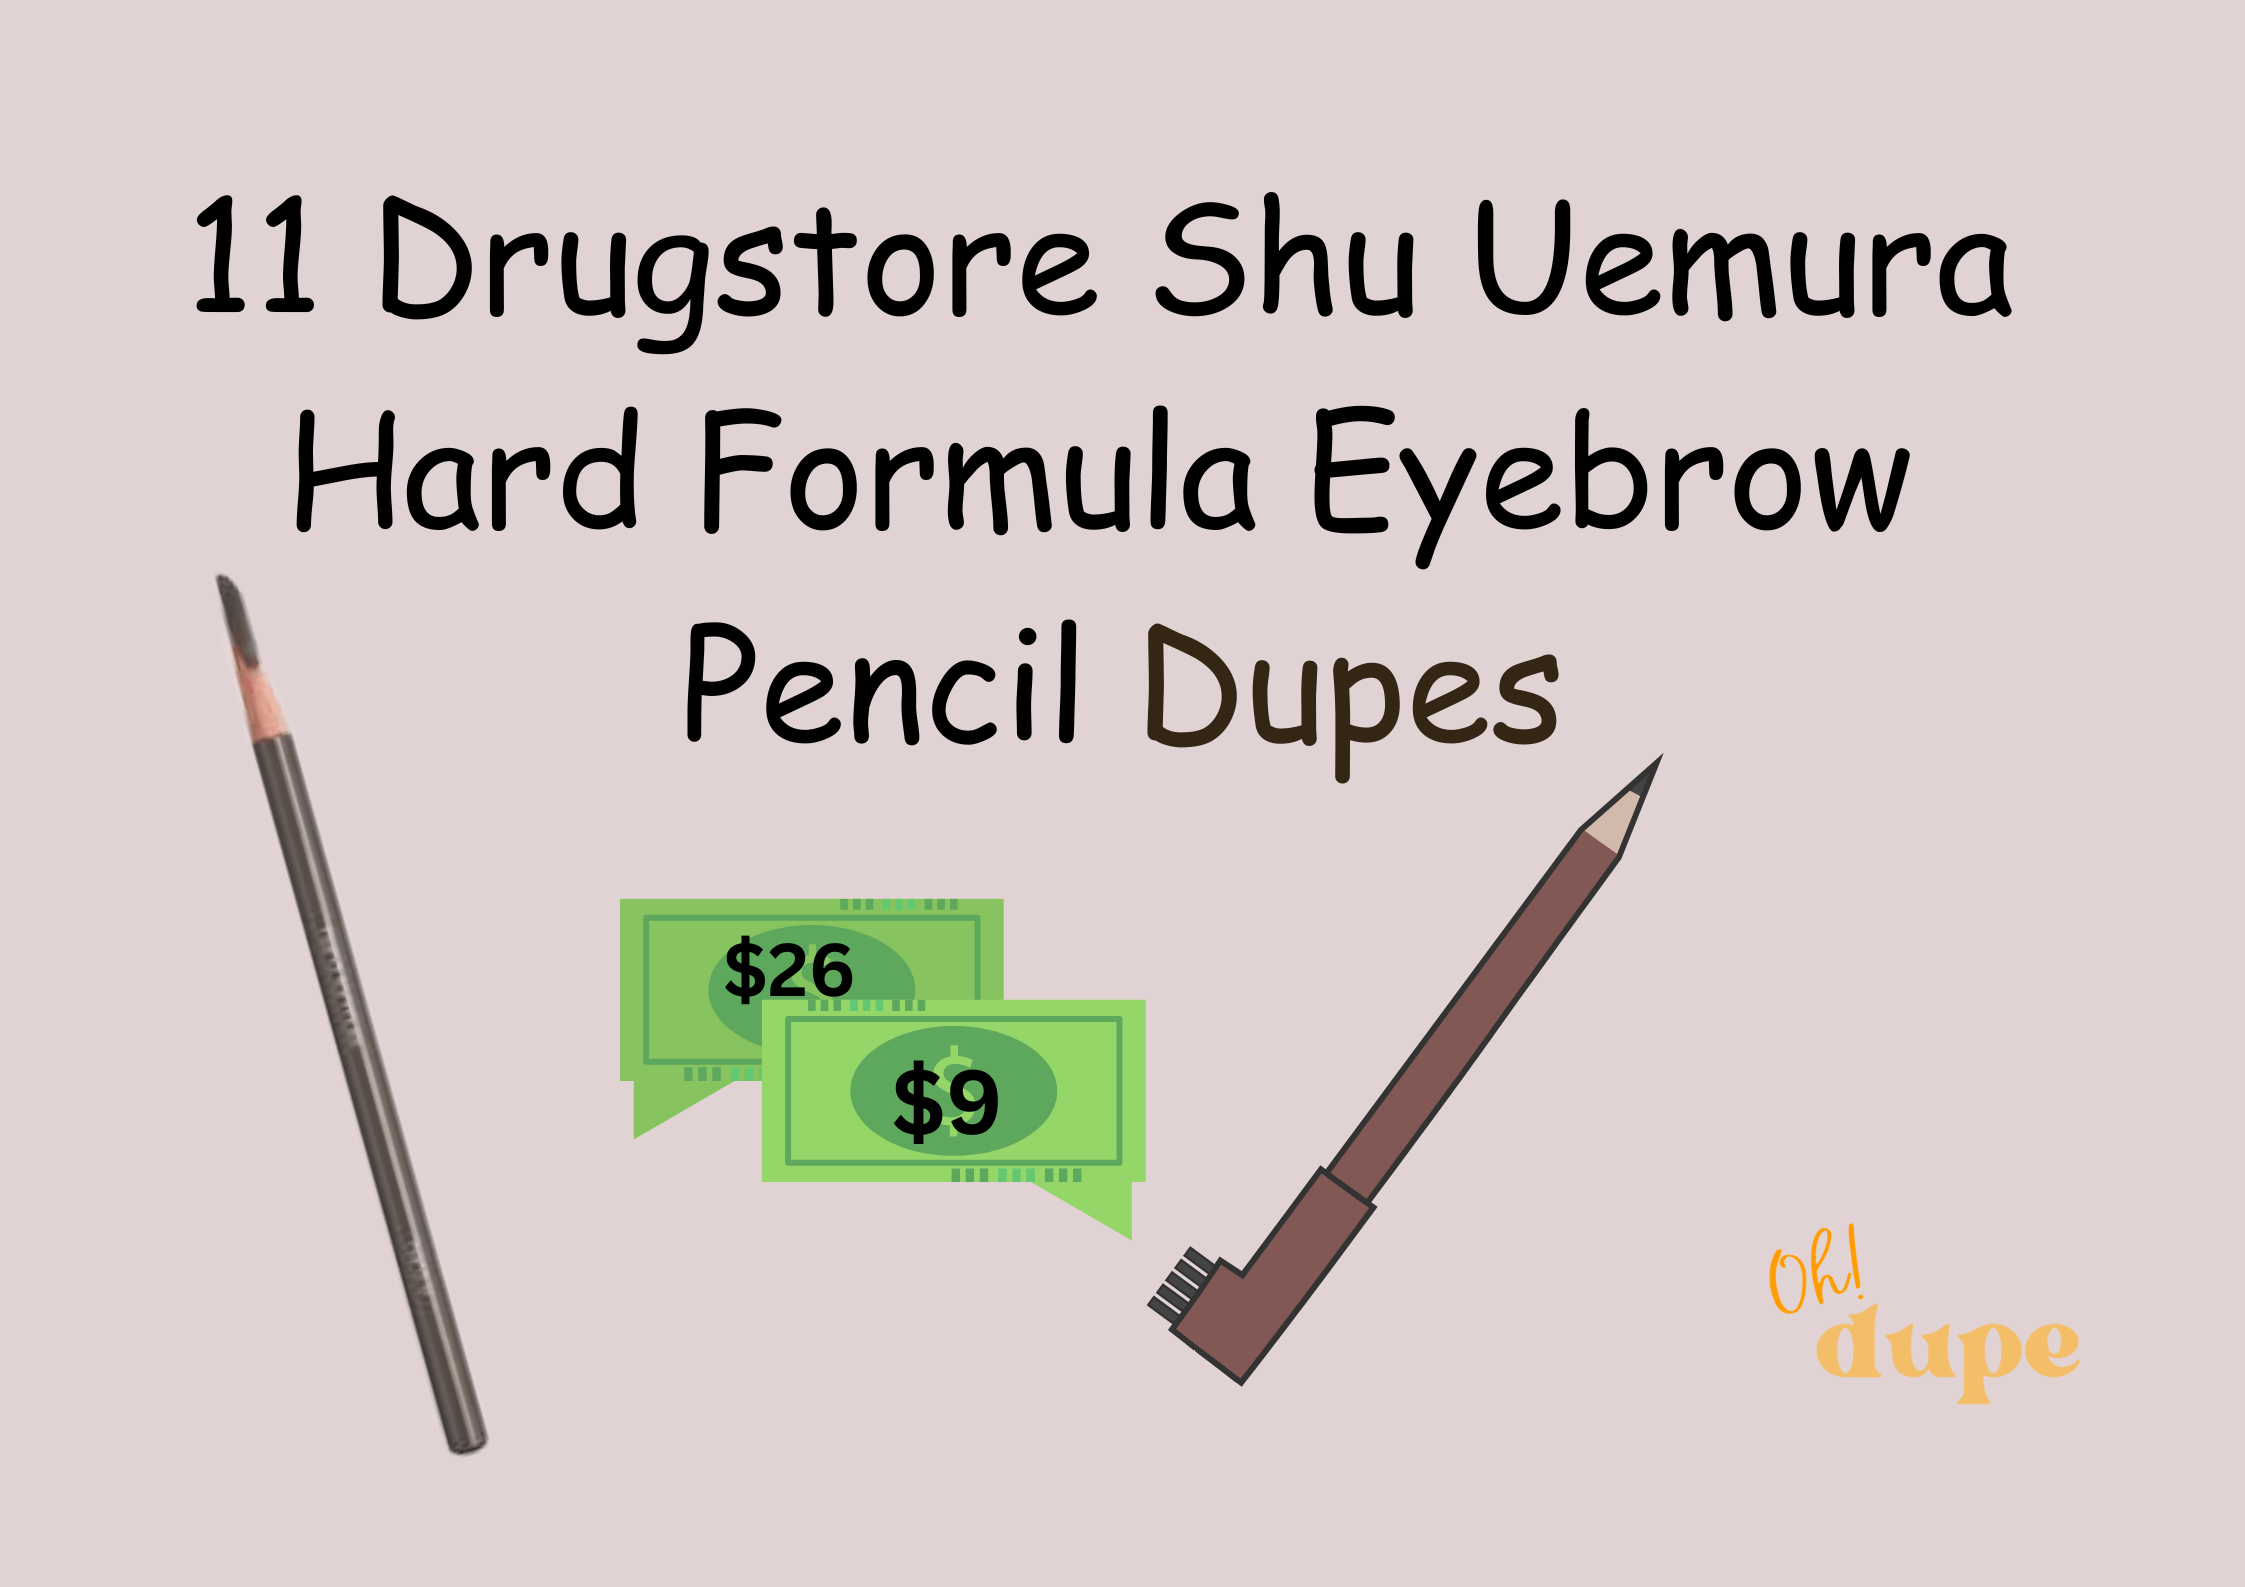 Drugstore Shu Uemura Hard Formula Eyebrow Pencil Dupe